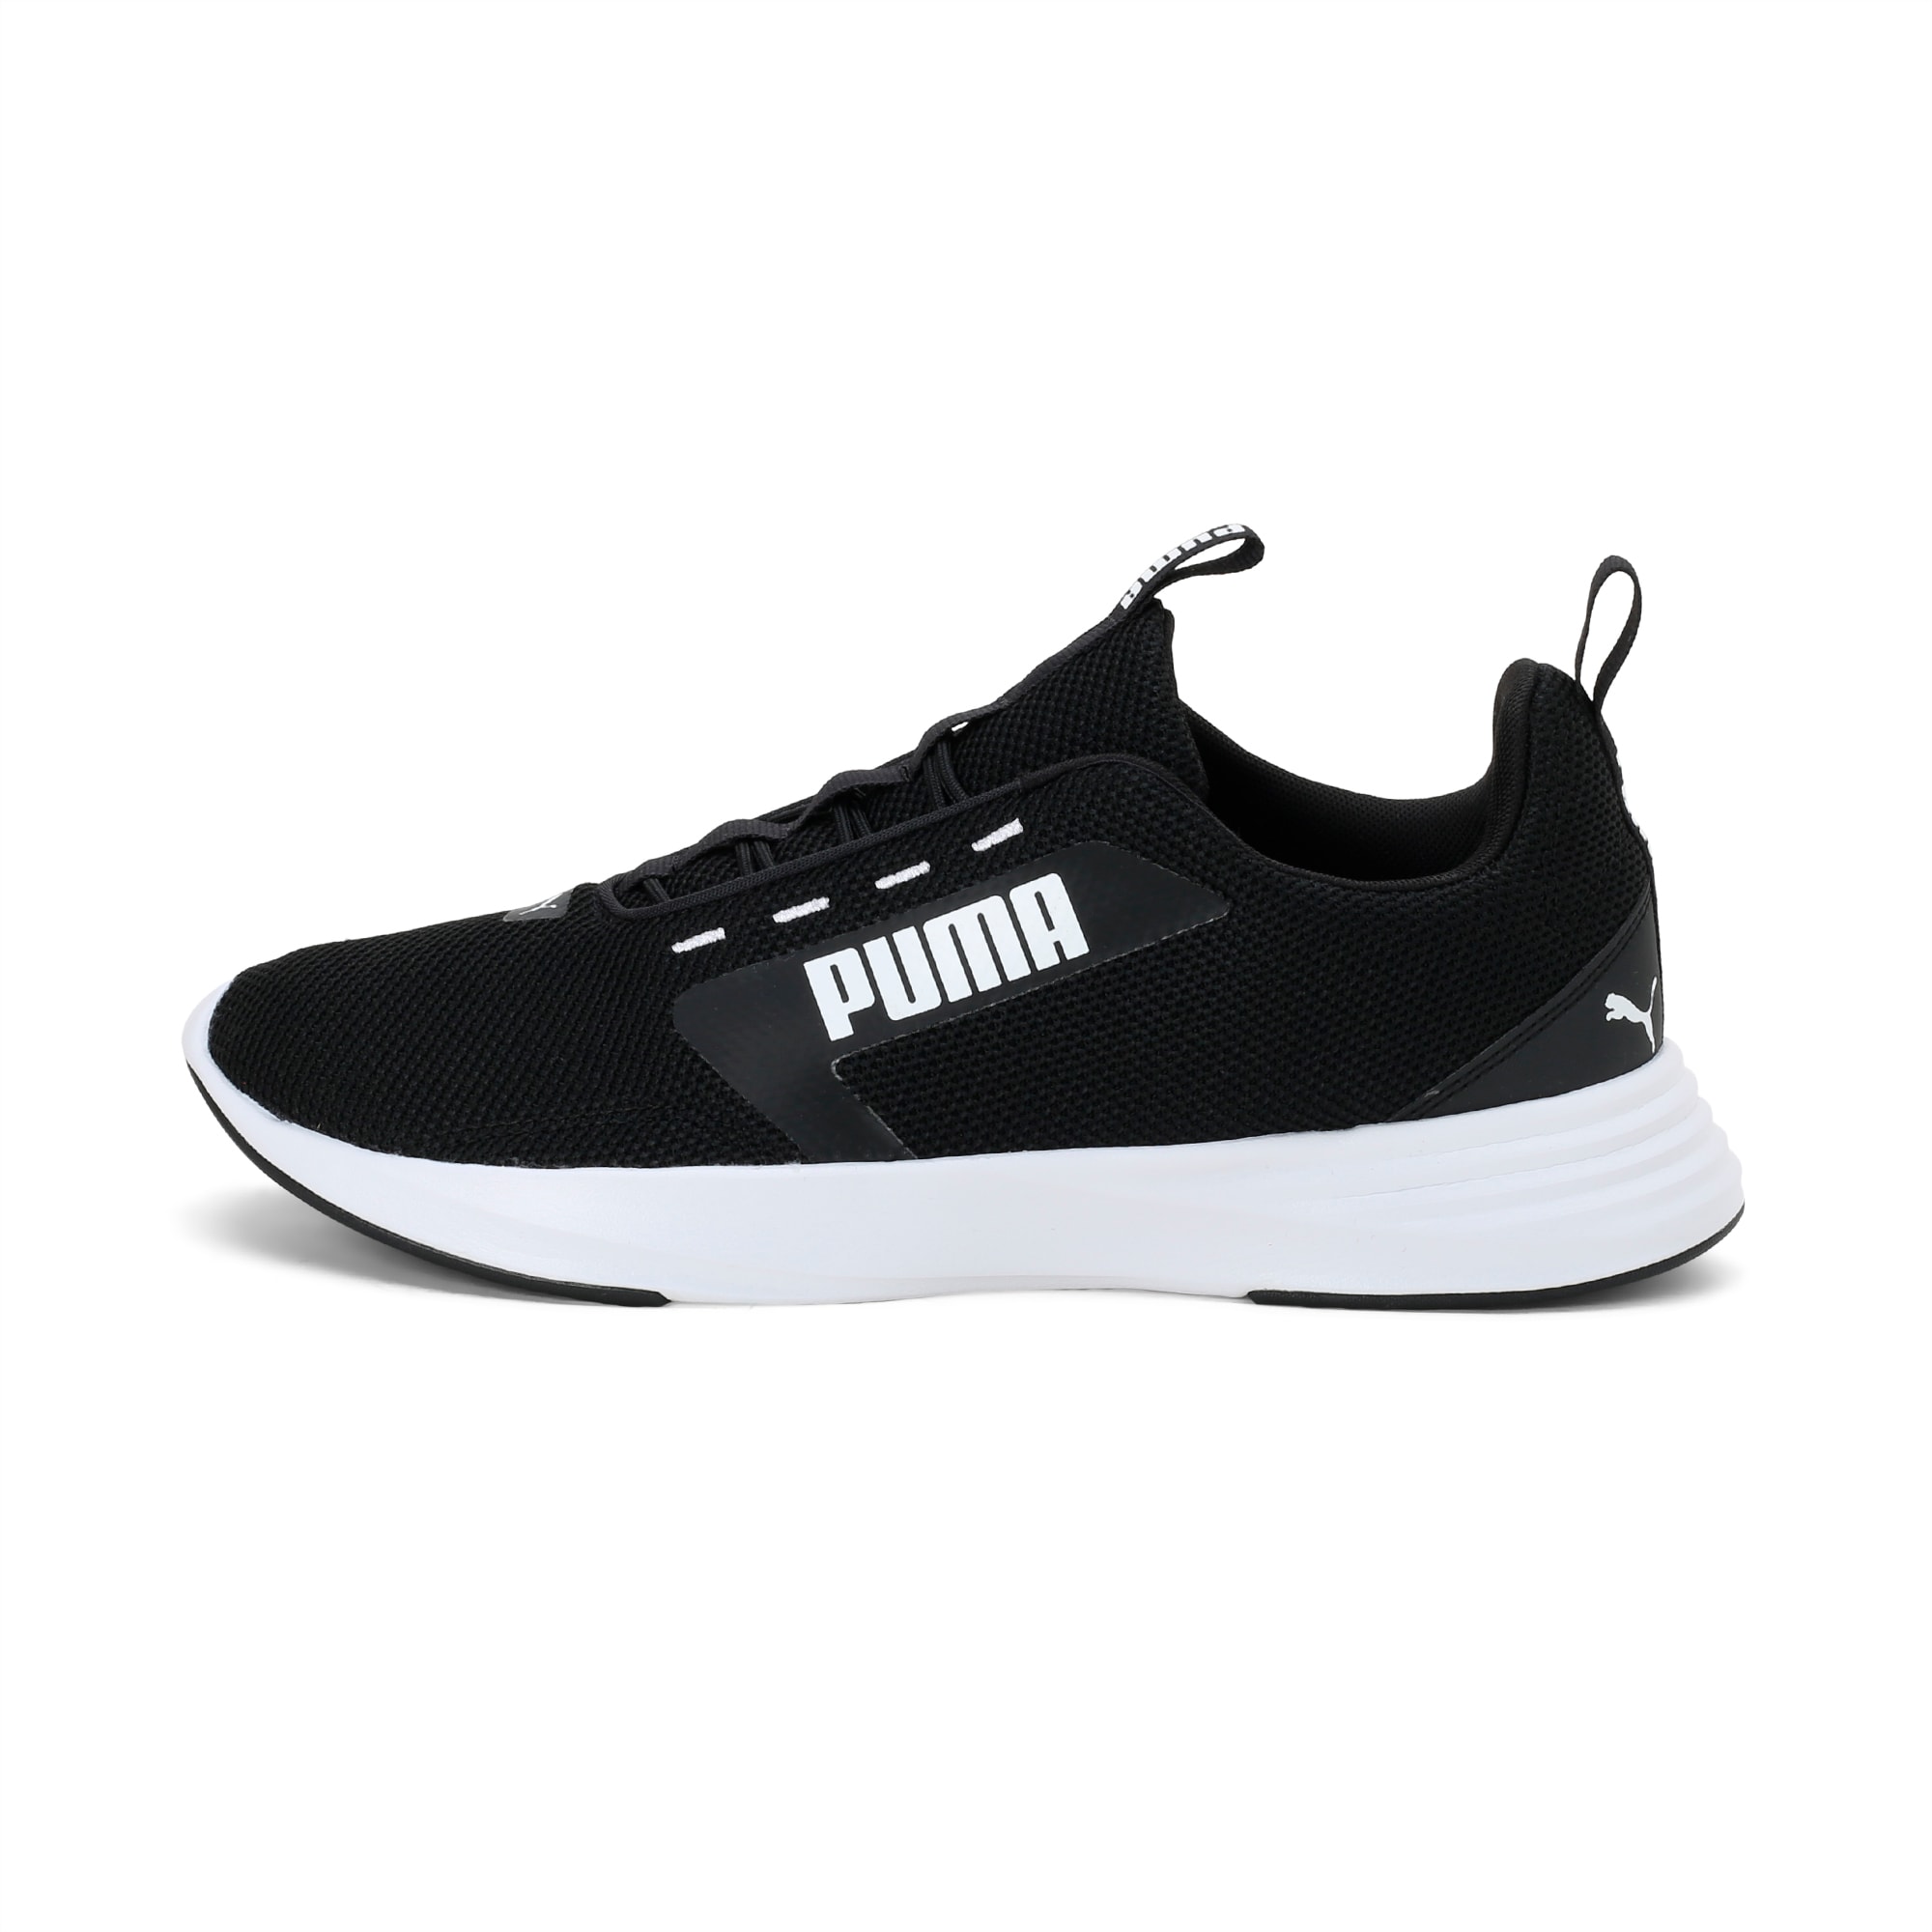 Extractor SoftFoam+ Running Shoes | Puma Black-Puma White | PUMA Shoes |  PUMA